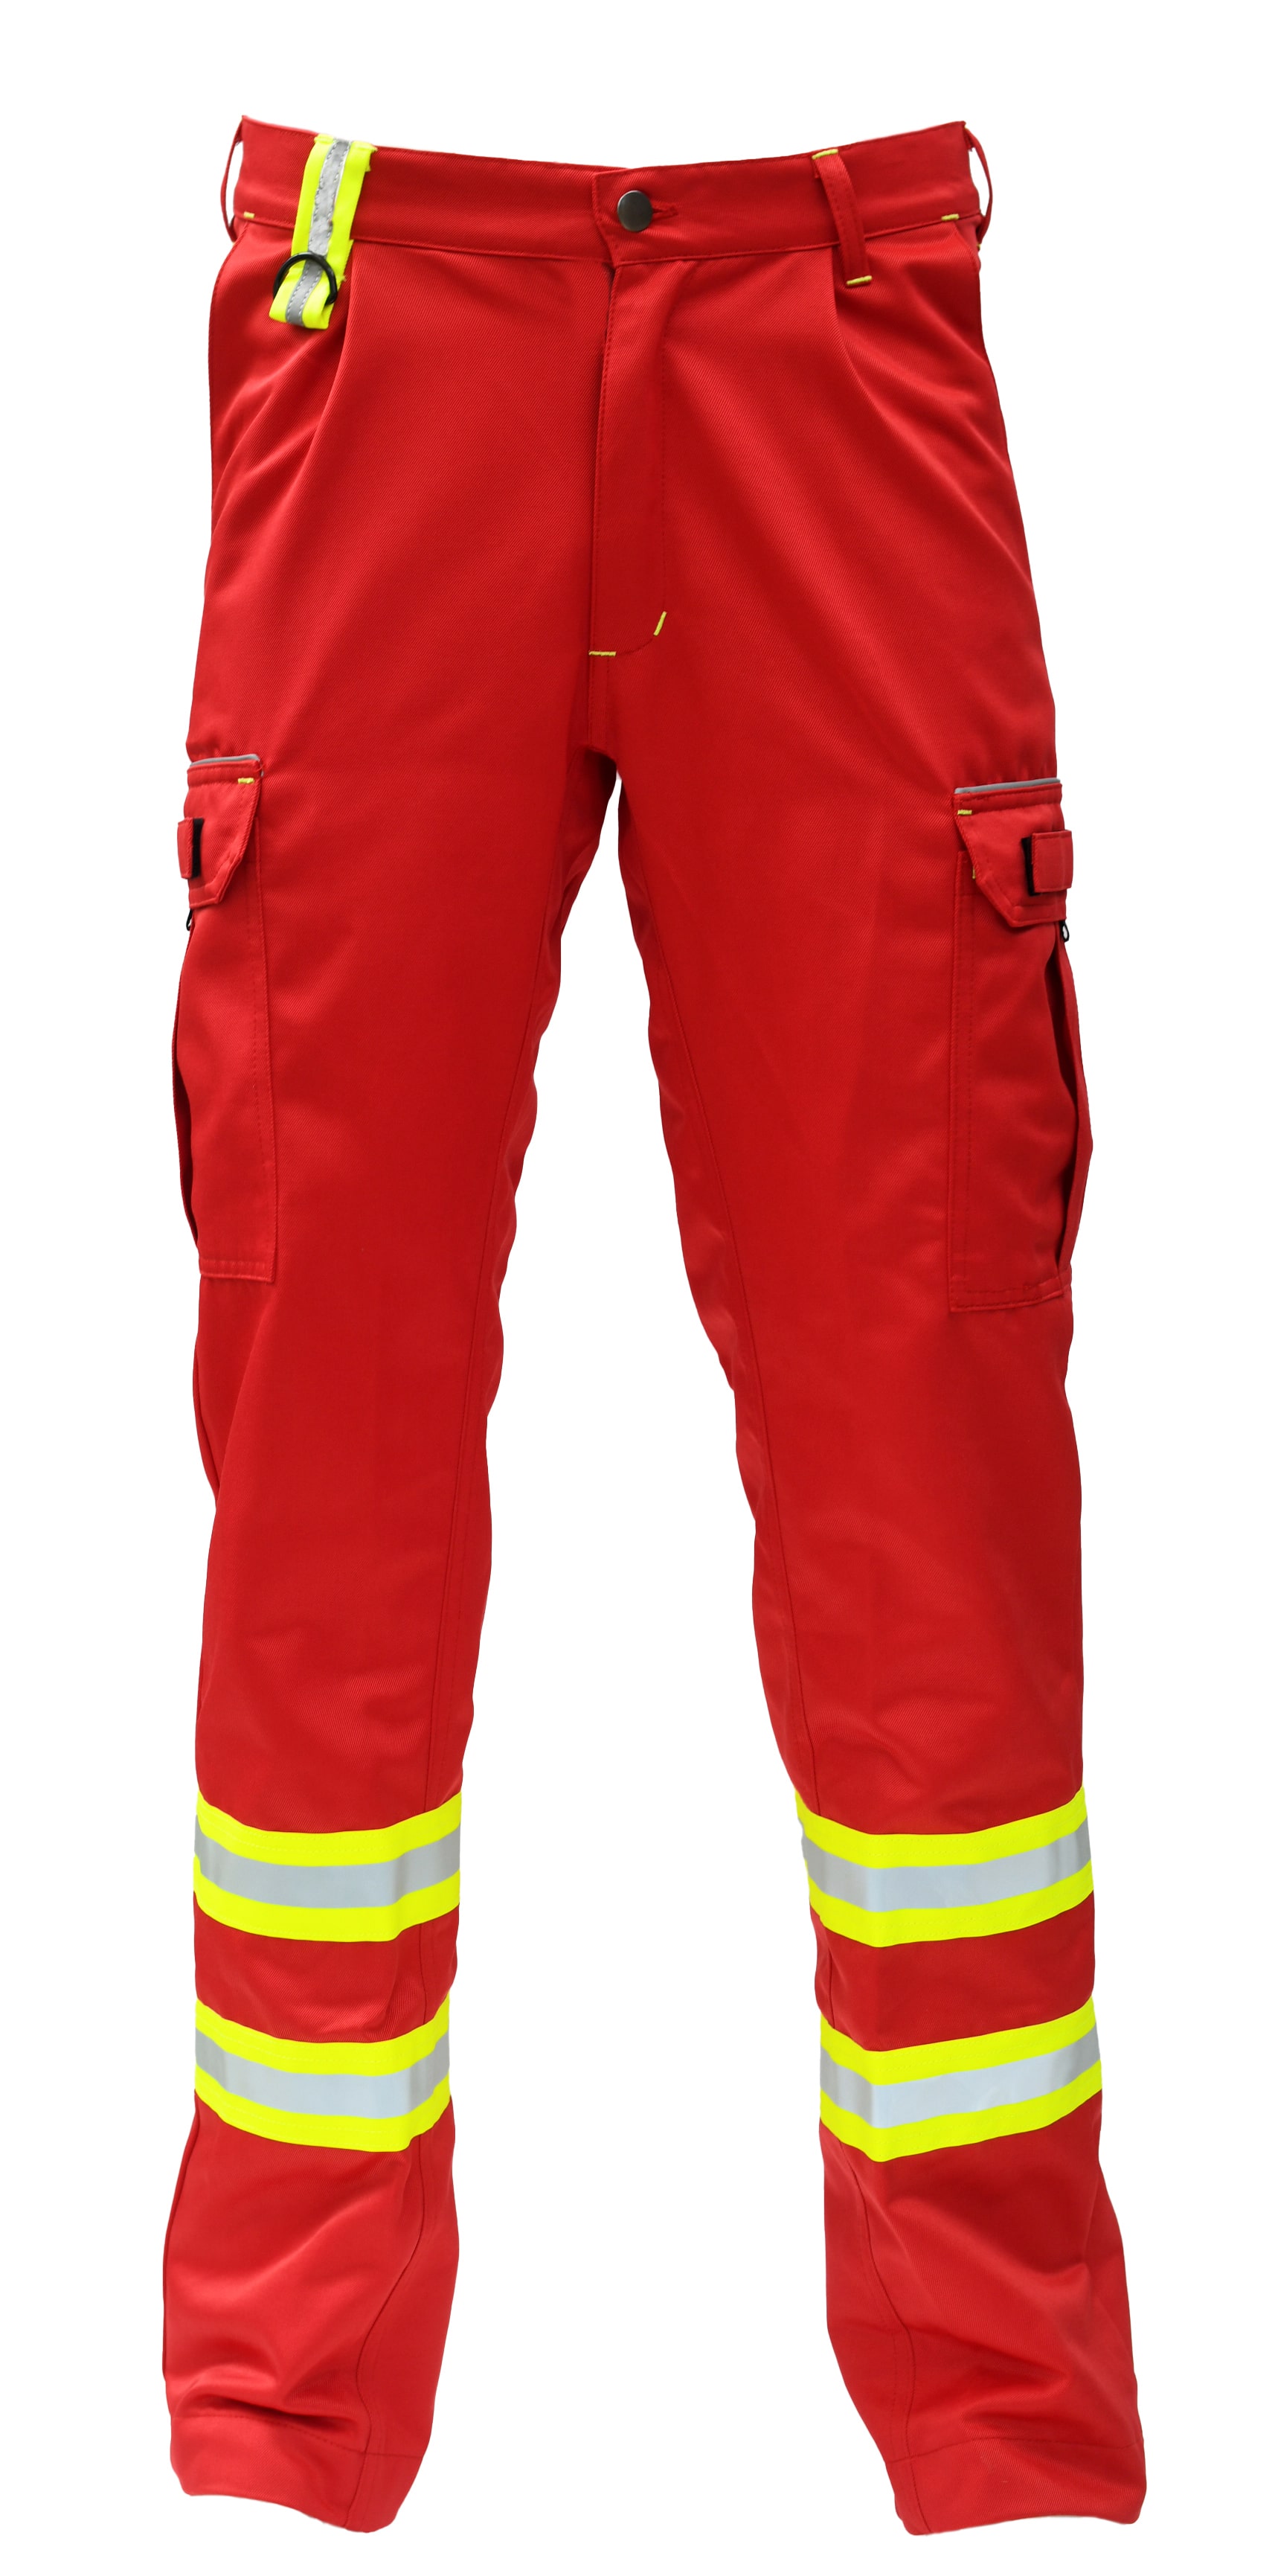 Rescuewear Unisex Hose Wasserrettung Rot - 32